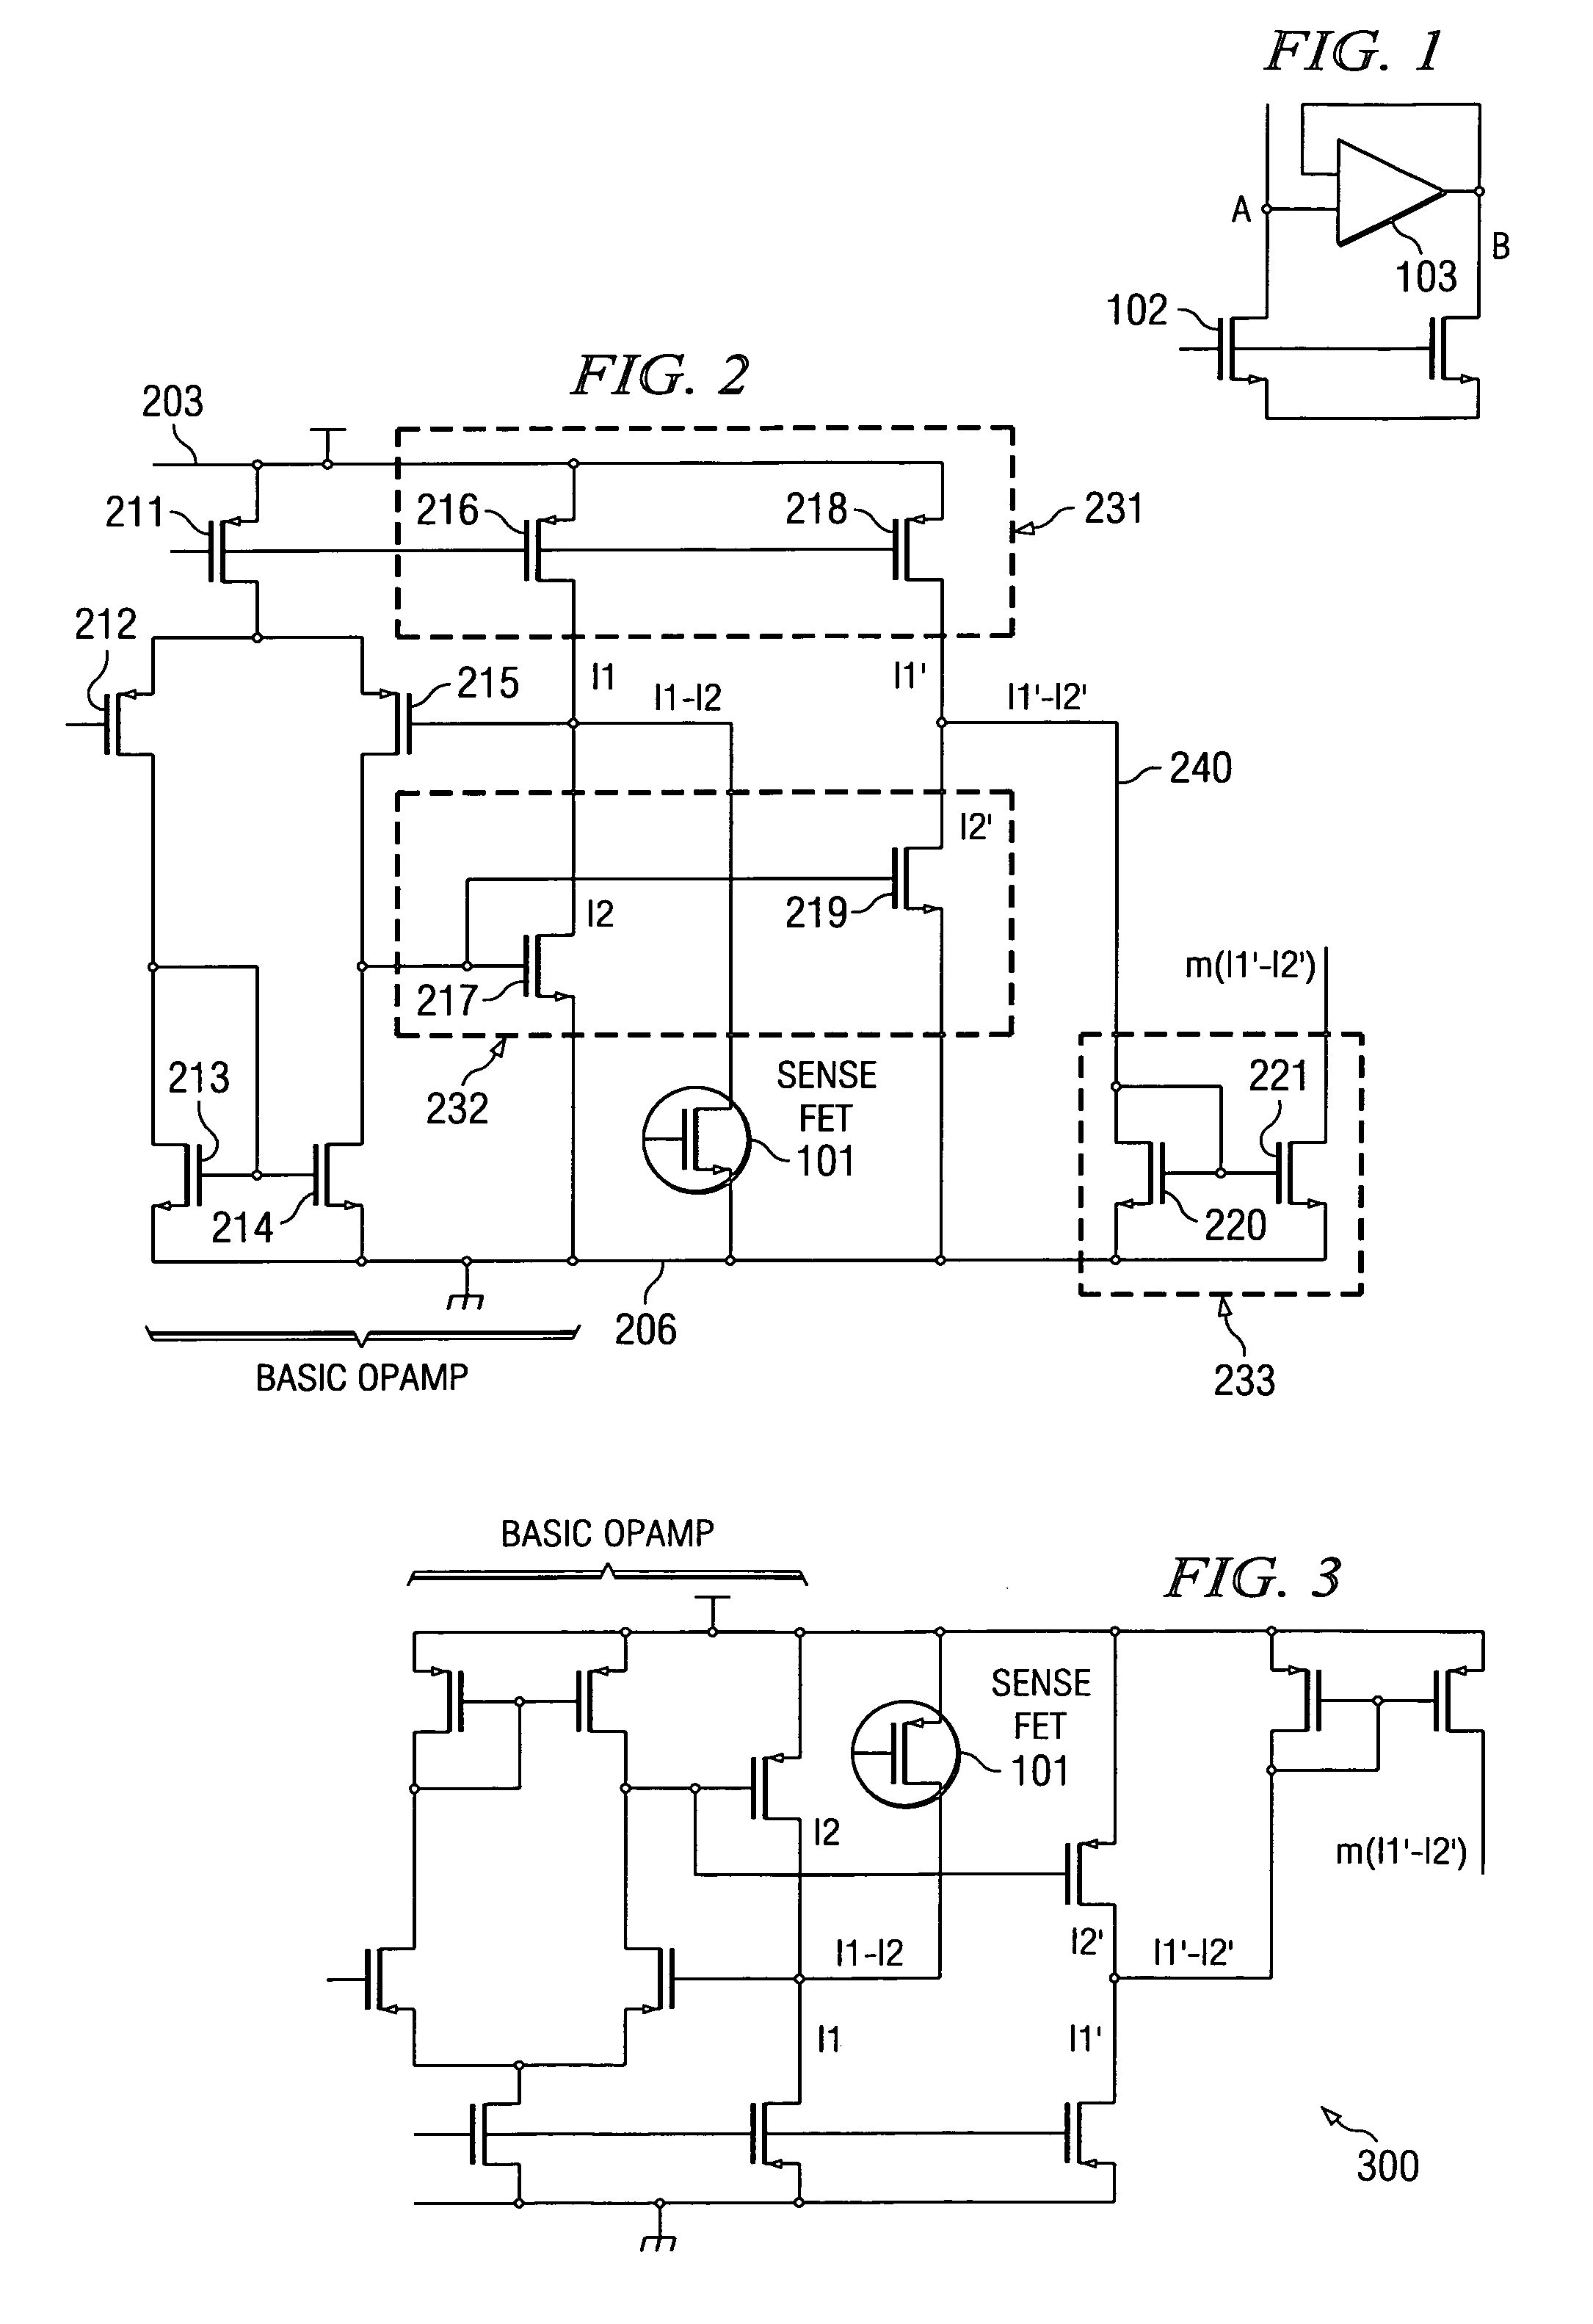 Current sensing circuit and method